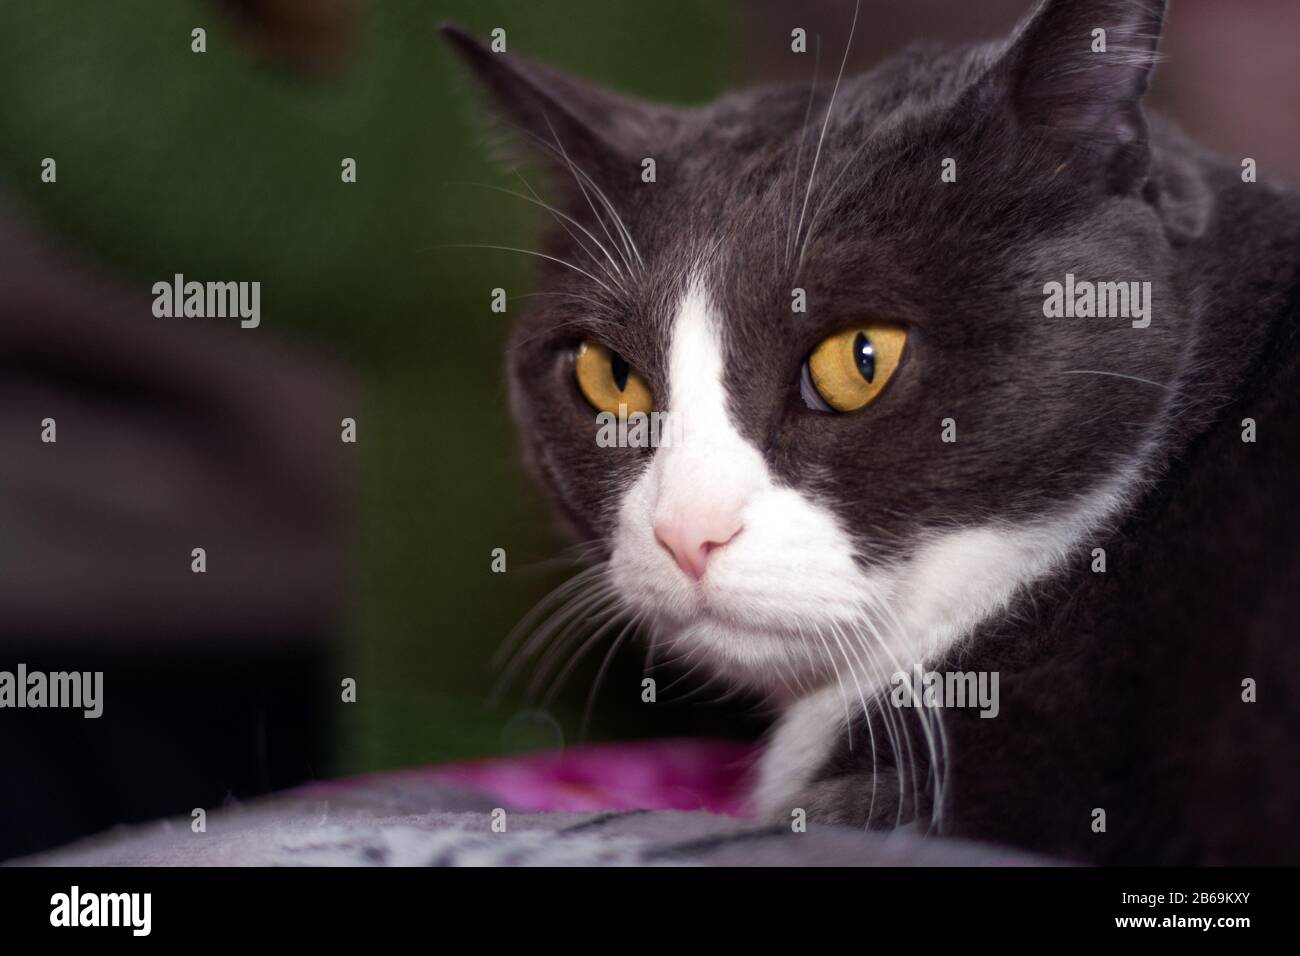 beautiful portrait of a grumpy cat Stock Photo